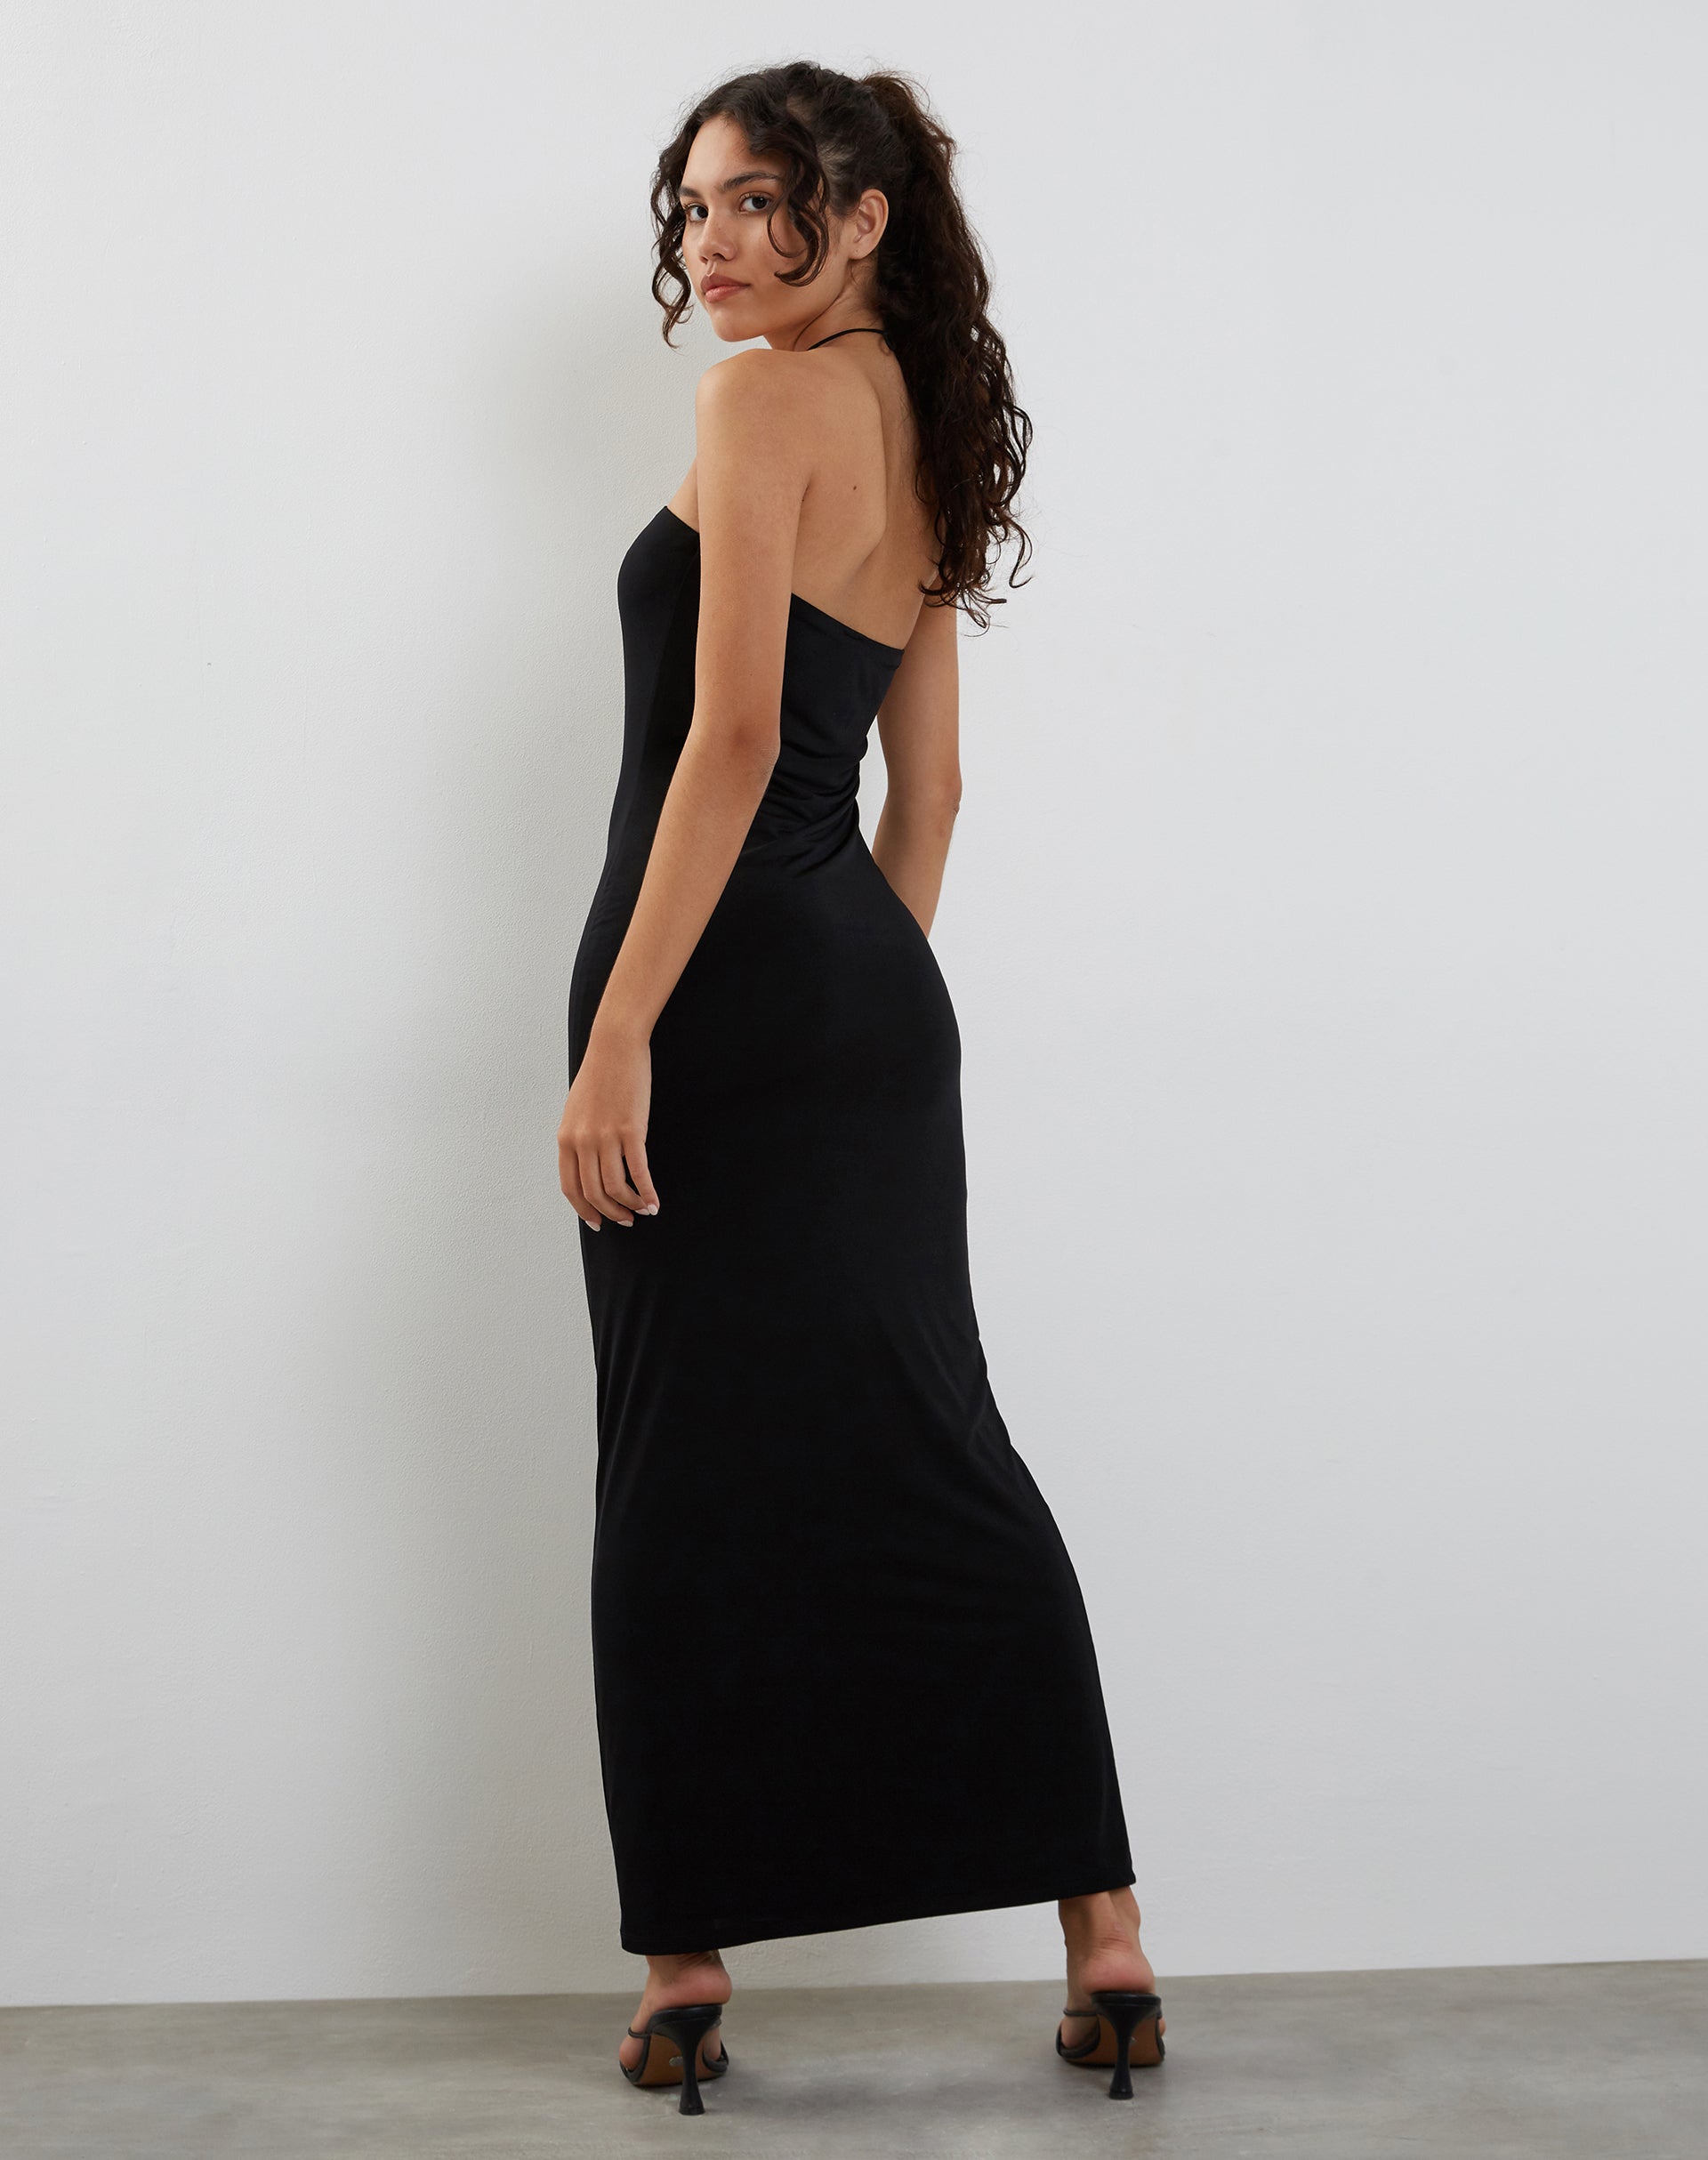 Woman Wearing Black Tube Long Dress · Free Stock Photo